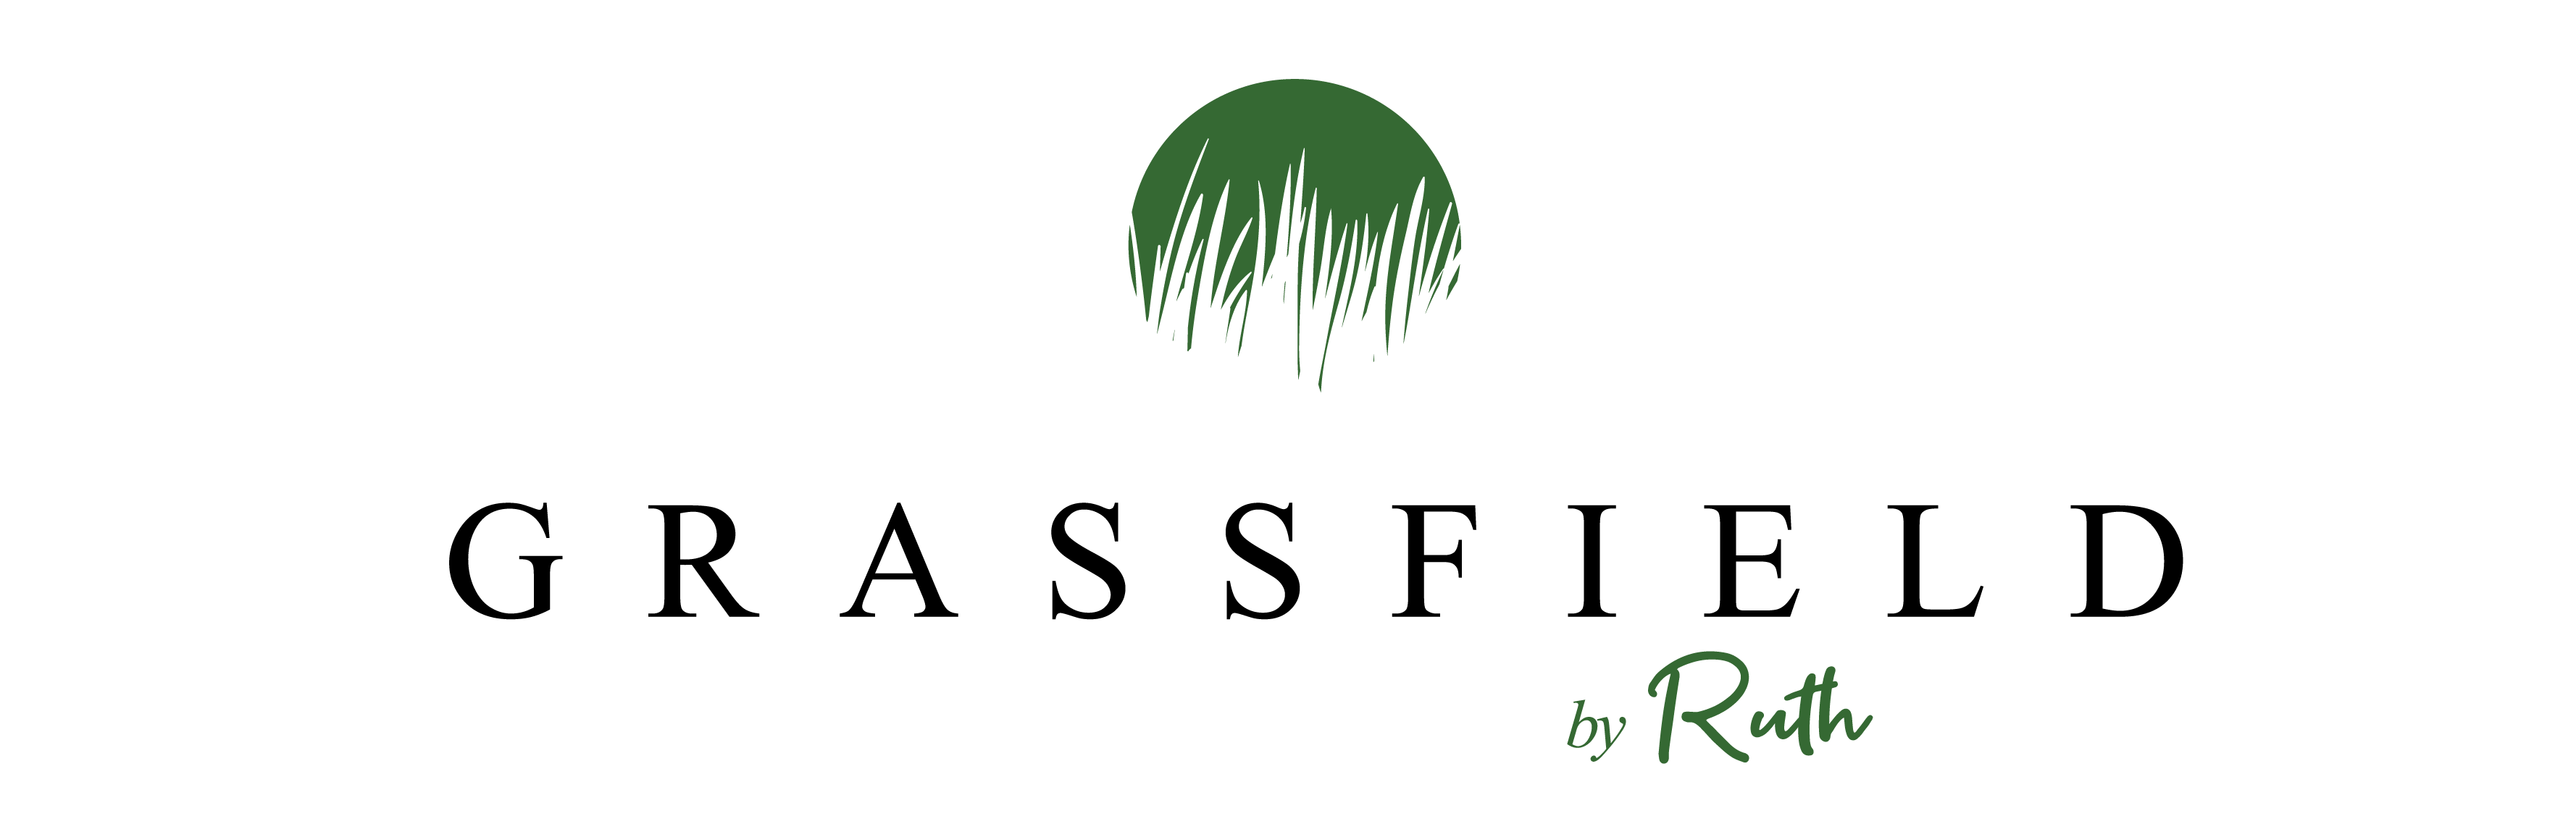 GRASSFIELD by Ruth logo